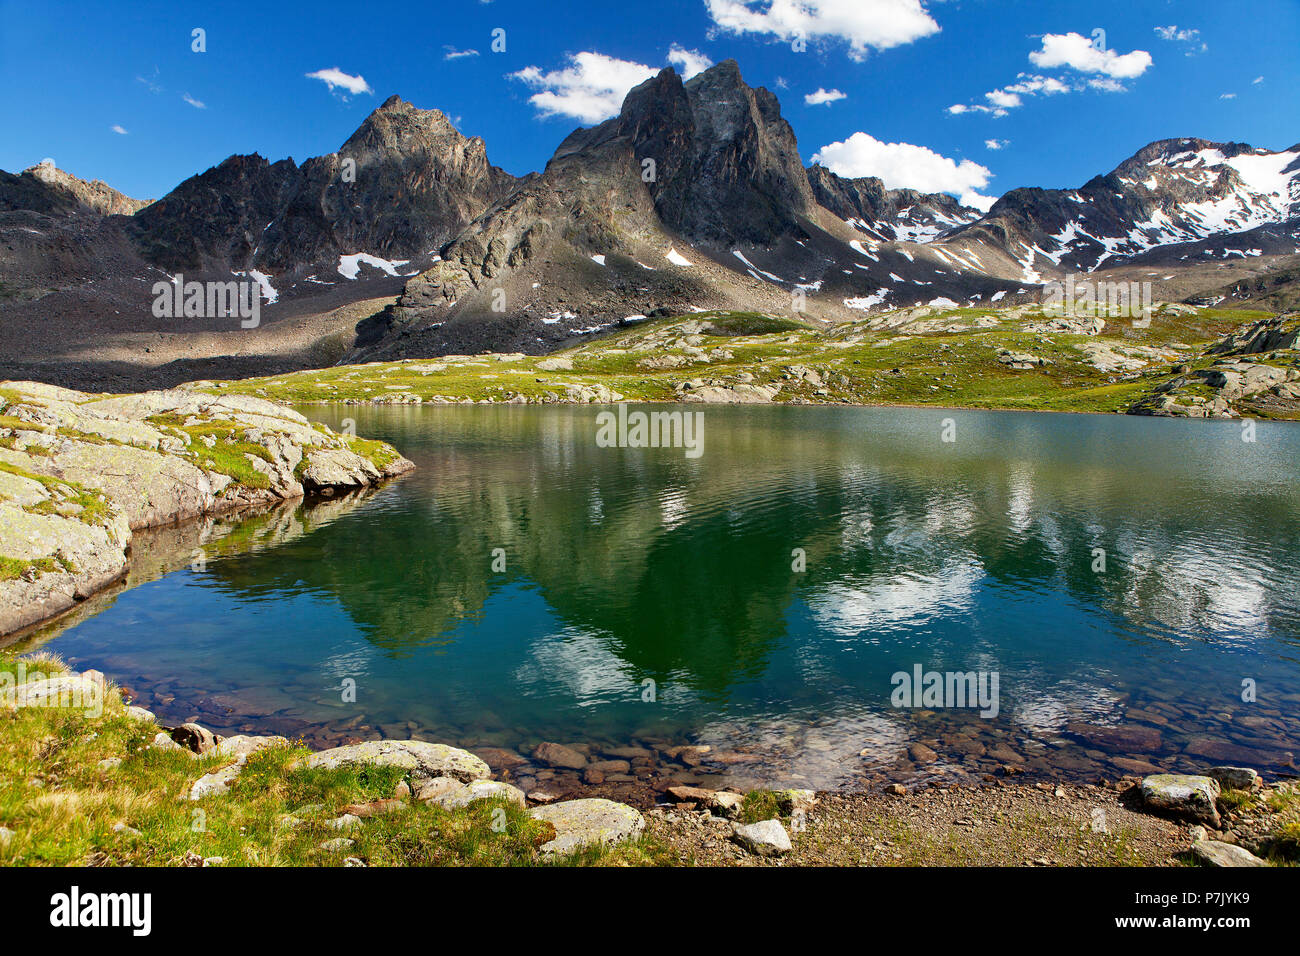 Austria, Tirolo, Alpi Venoste, Grande lago nella caduta di Bach Kar contro Pfroslkopf Foto Stock